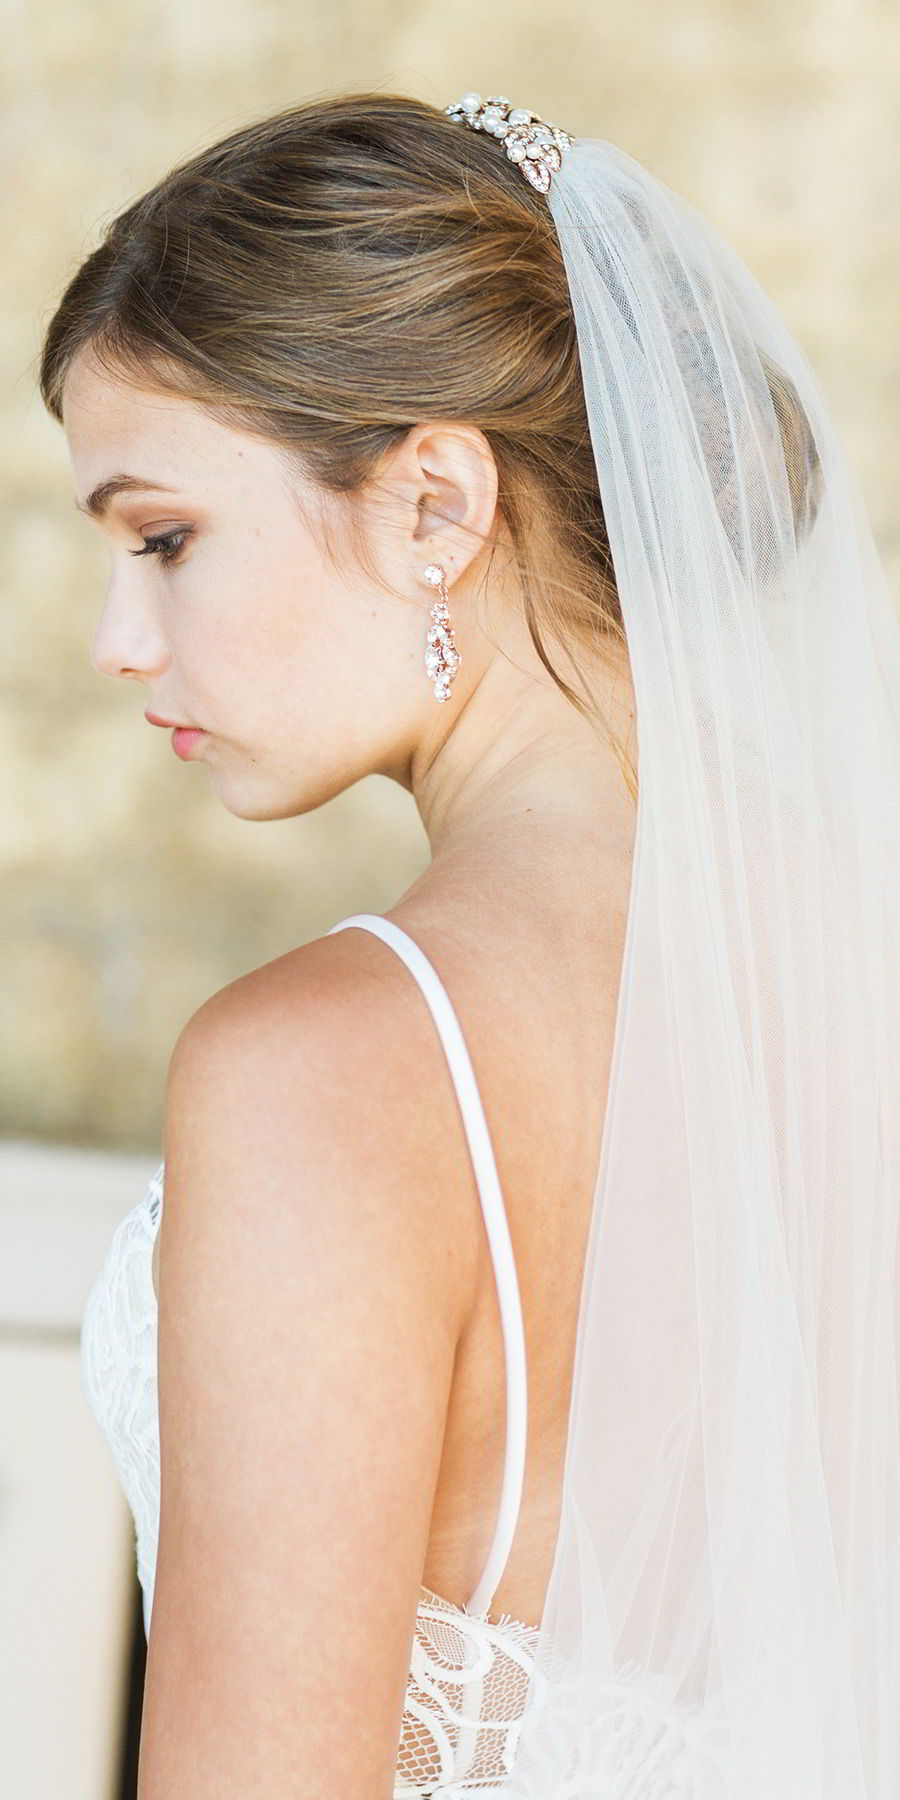 bel aire bridal accessories 6202 flower leaves comb headpiece veil earrings